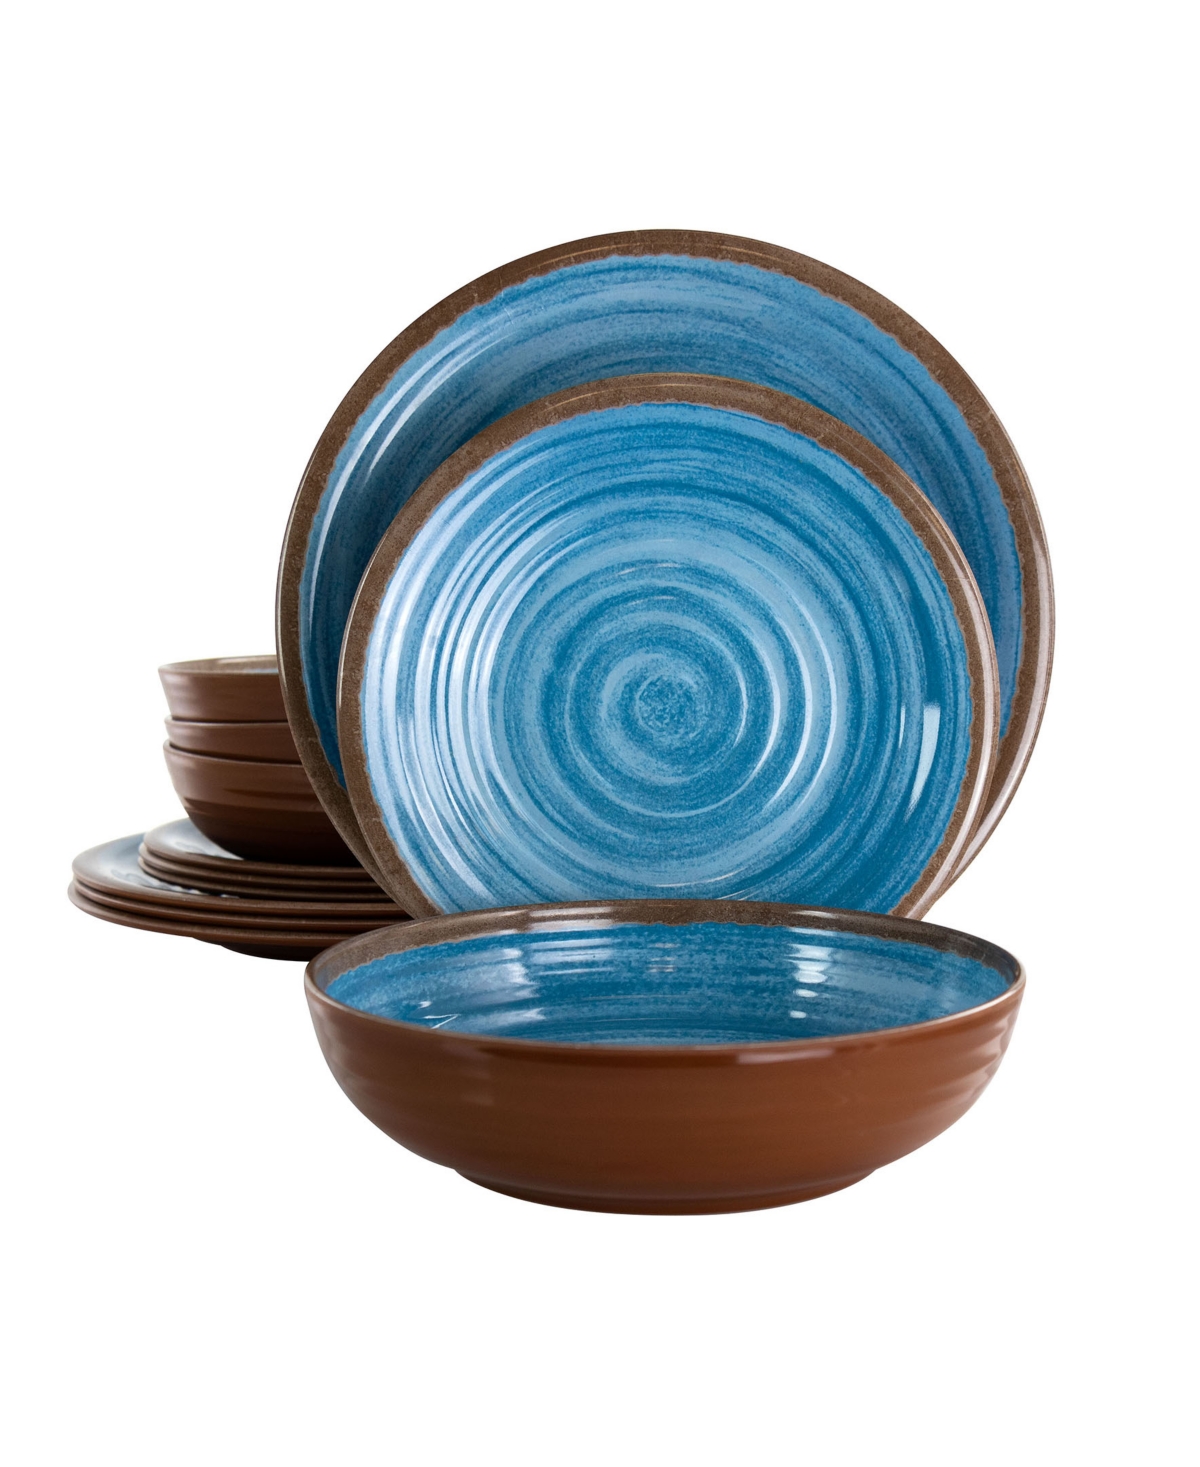 Rippled Tides Melamine Dinnerware Set of 12 Pieces - Blue